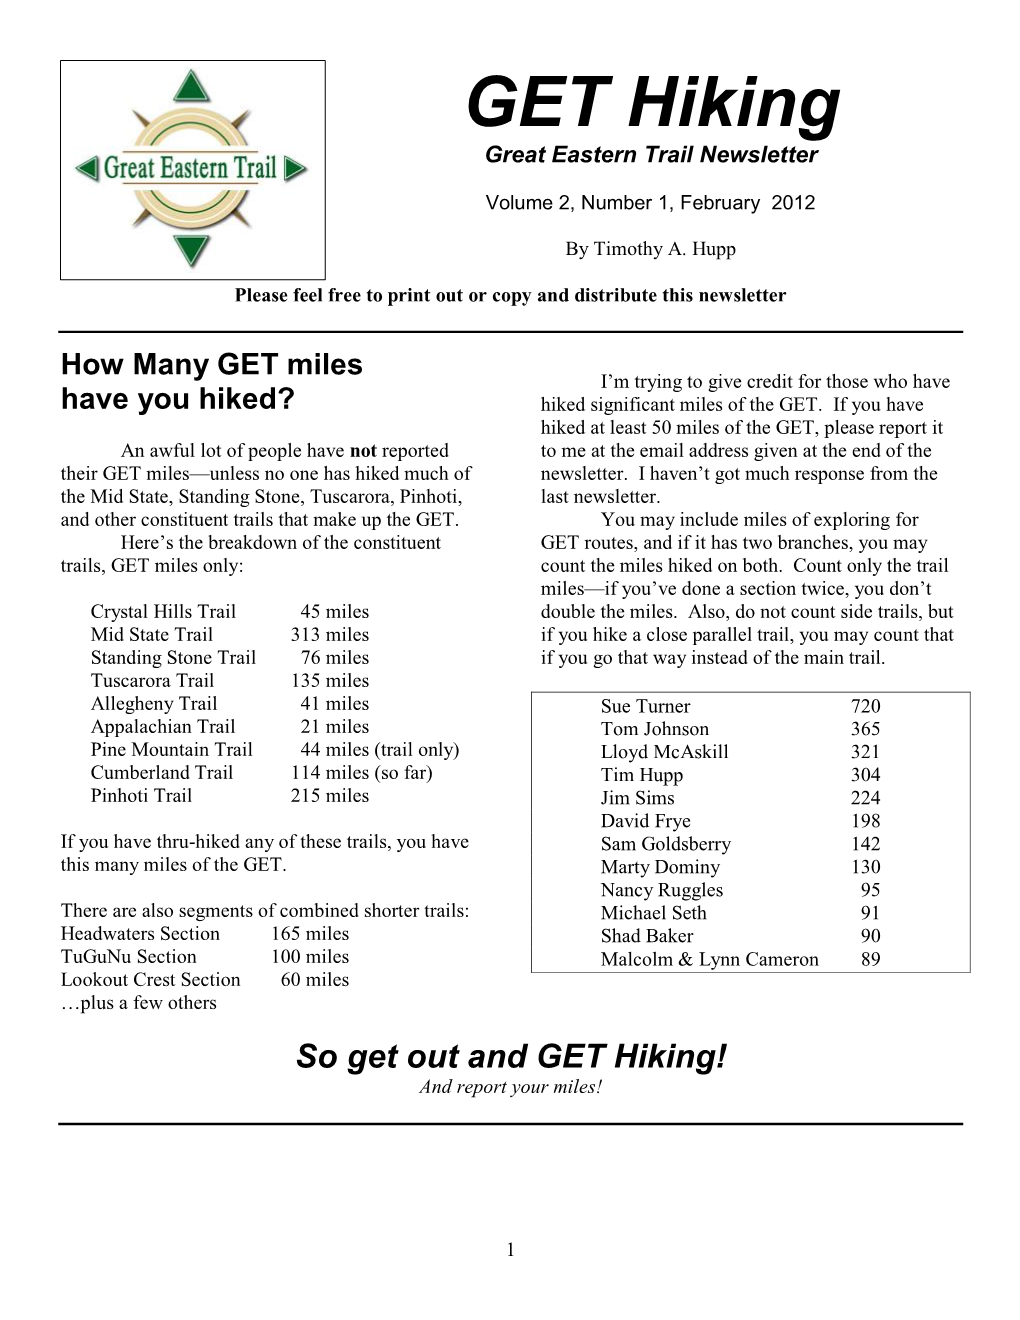 GET Newsletter Volume 2 Edition 1 February 2012